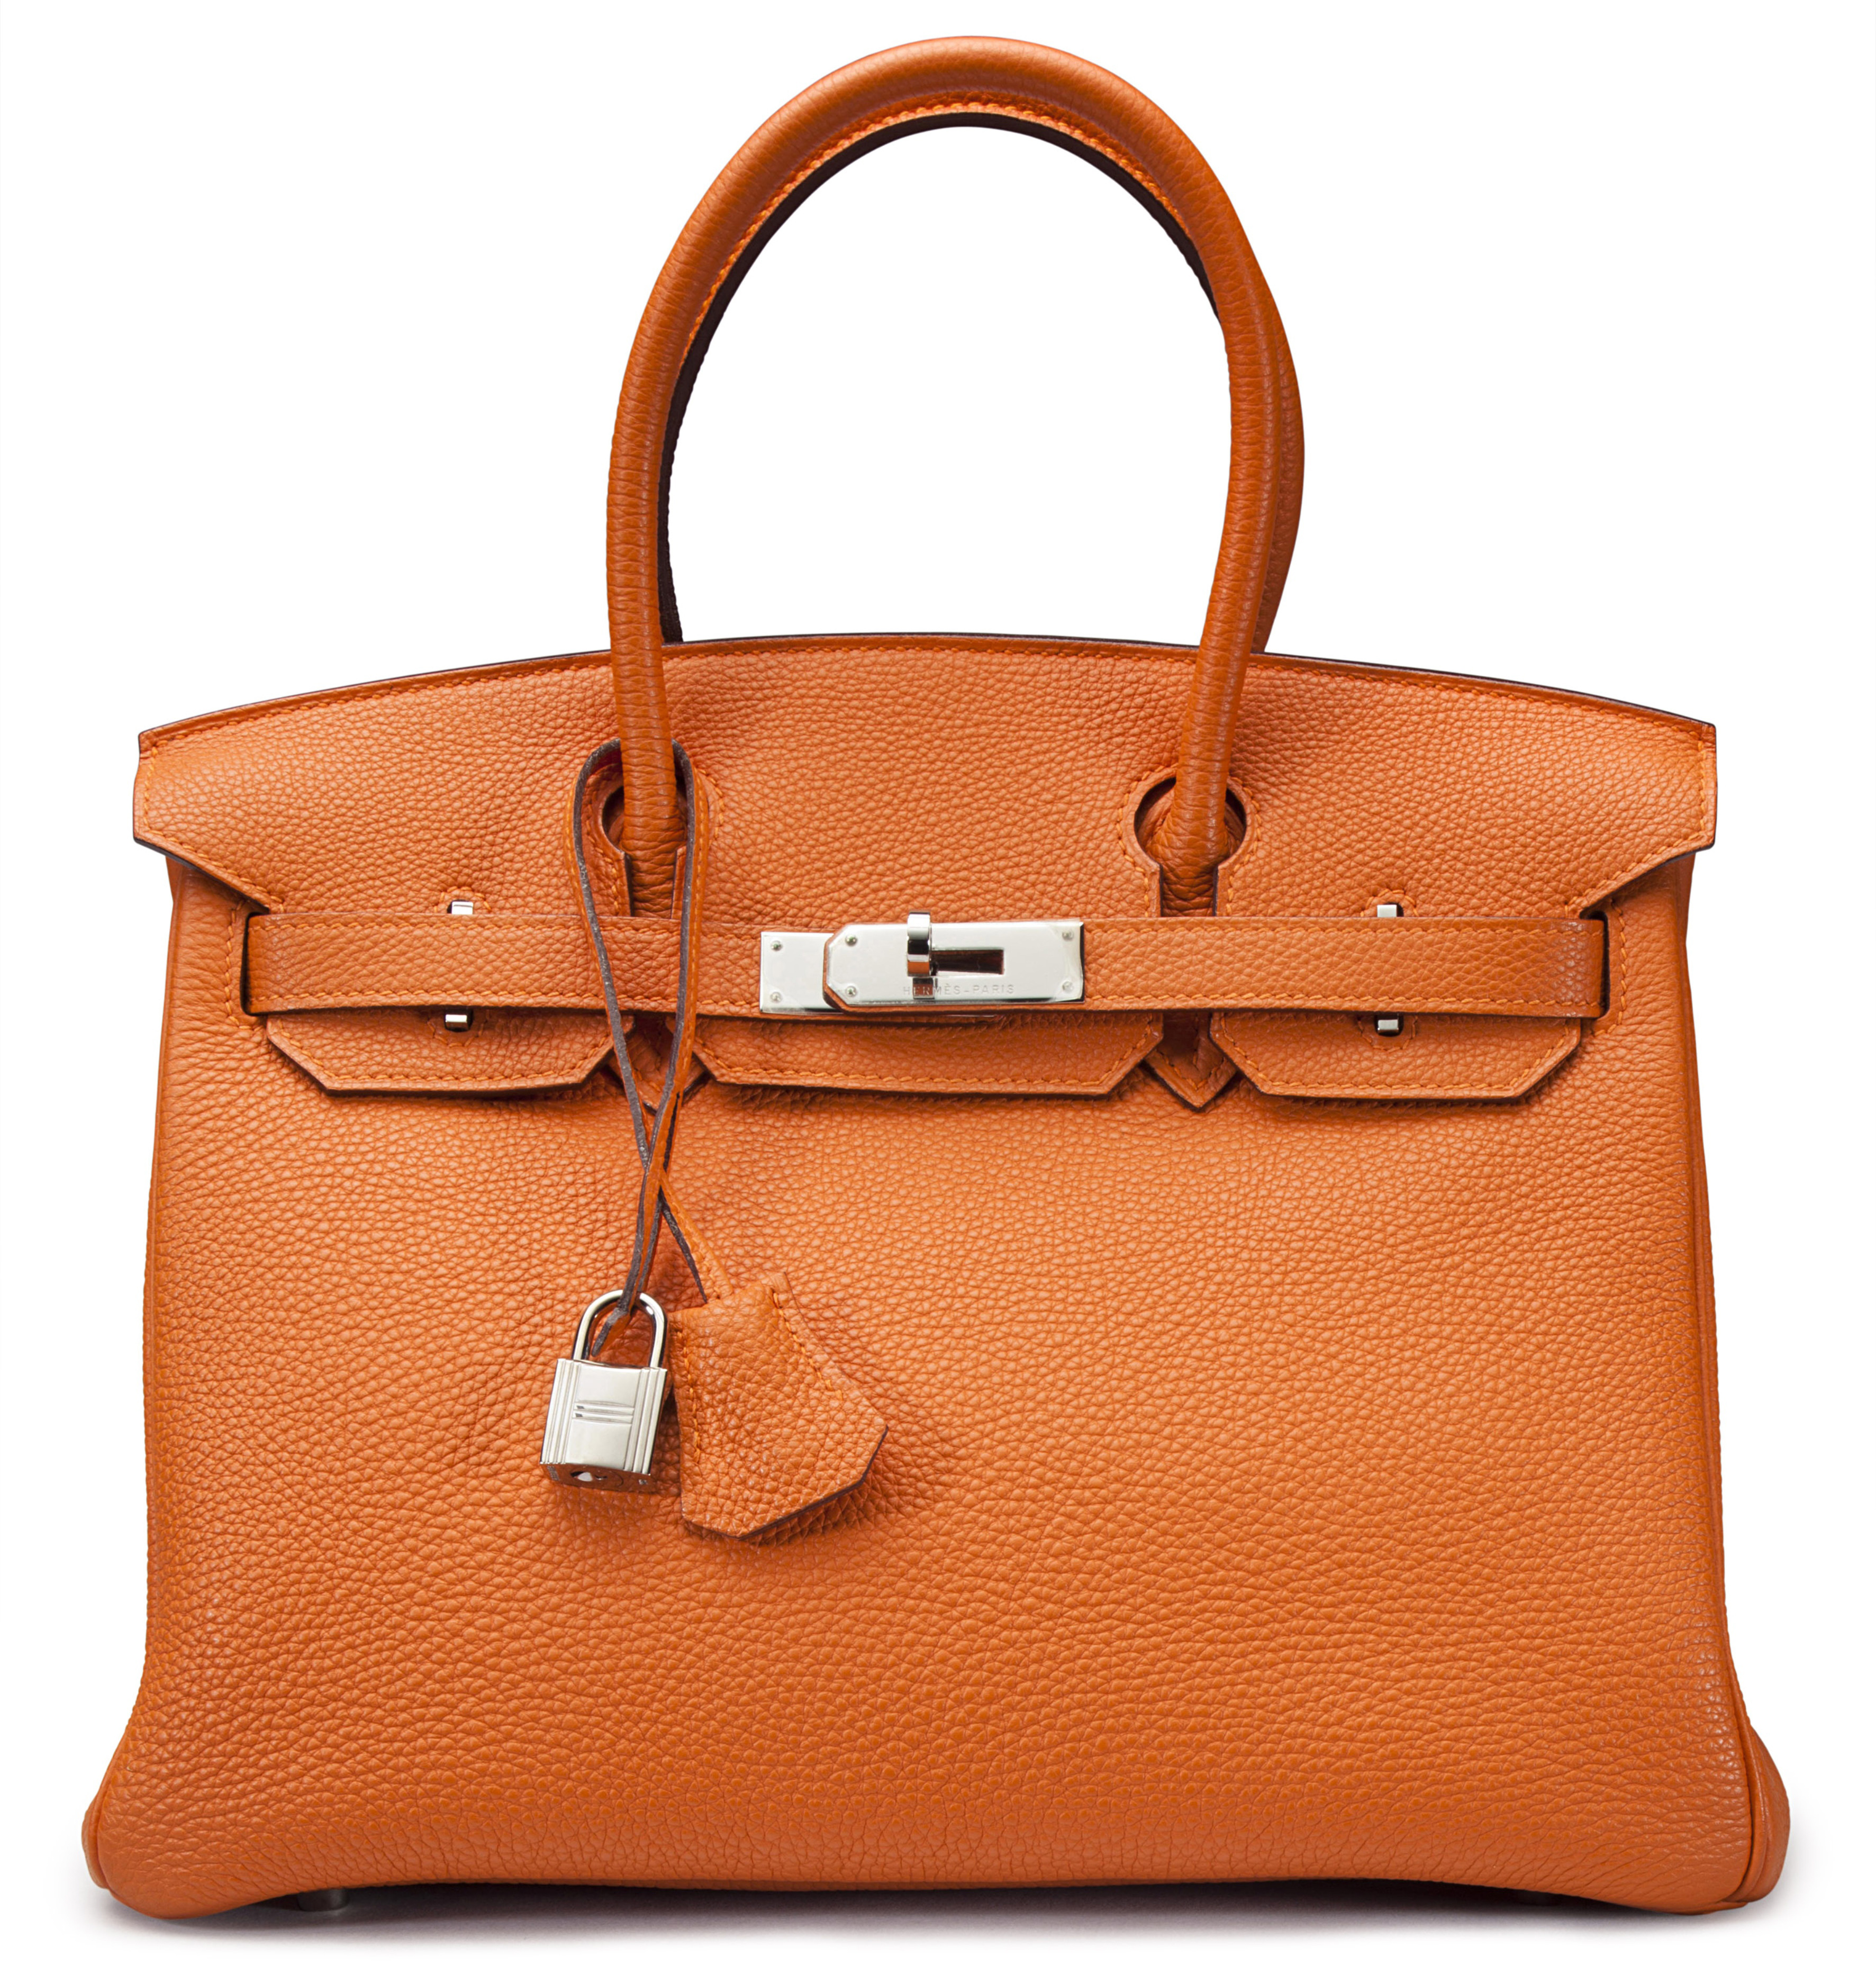 Hermes Birkin Bag, More Than Just a Bag | nrd.kbic-nsn.gov